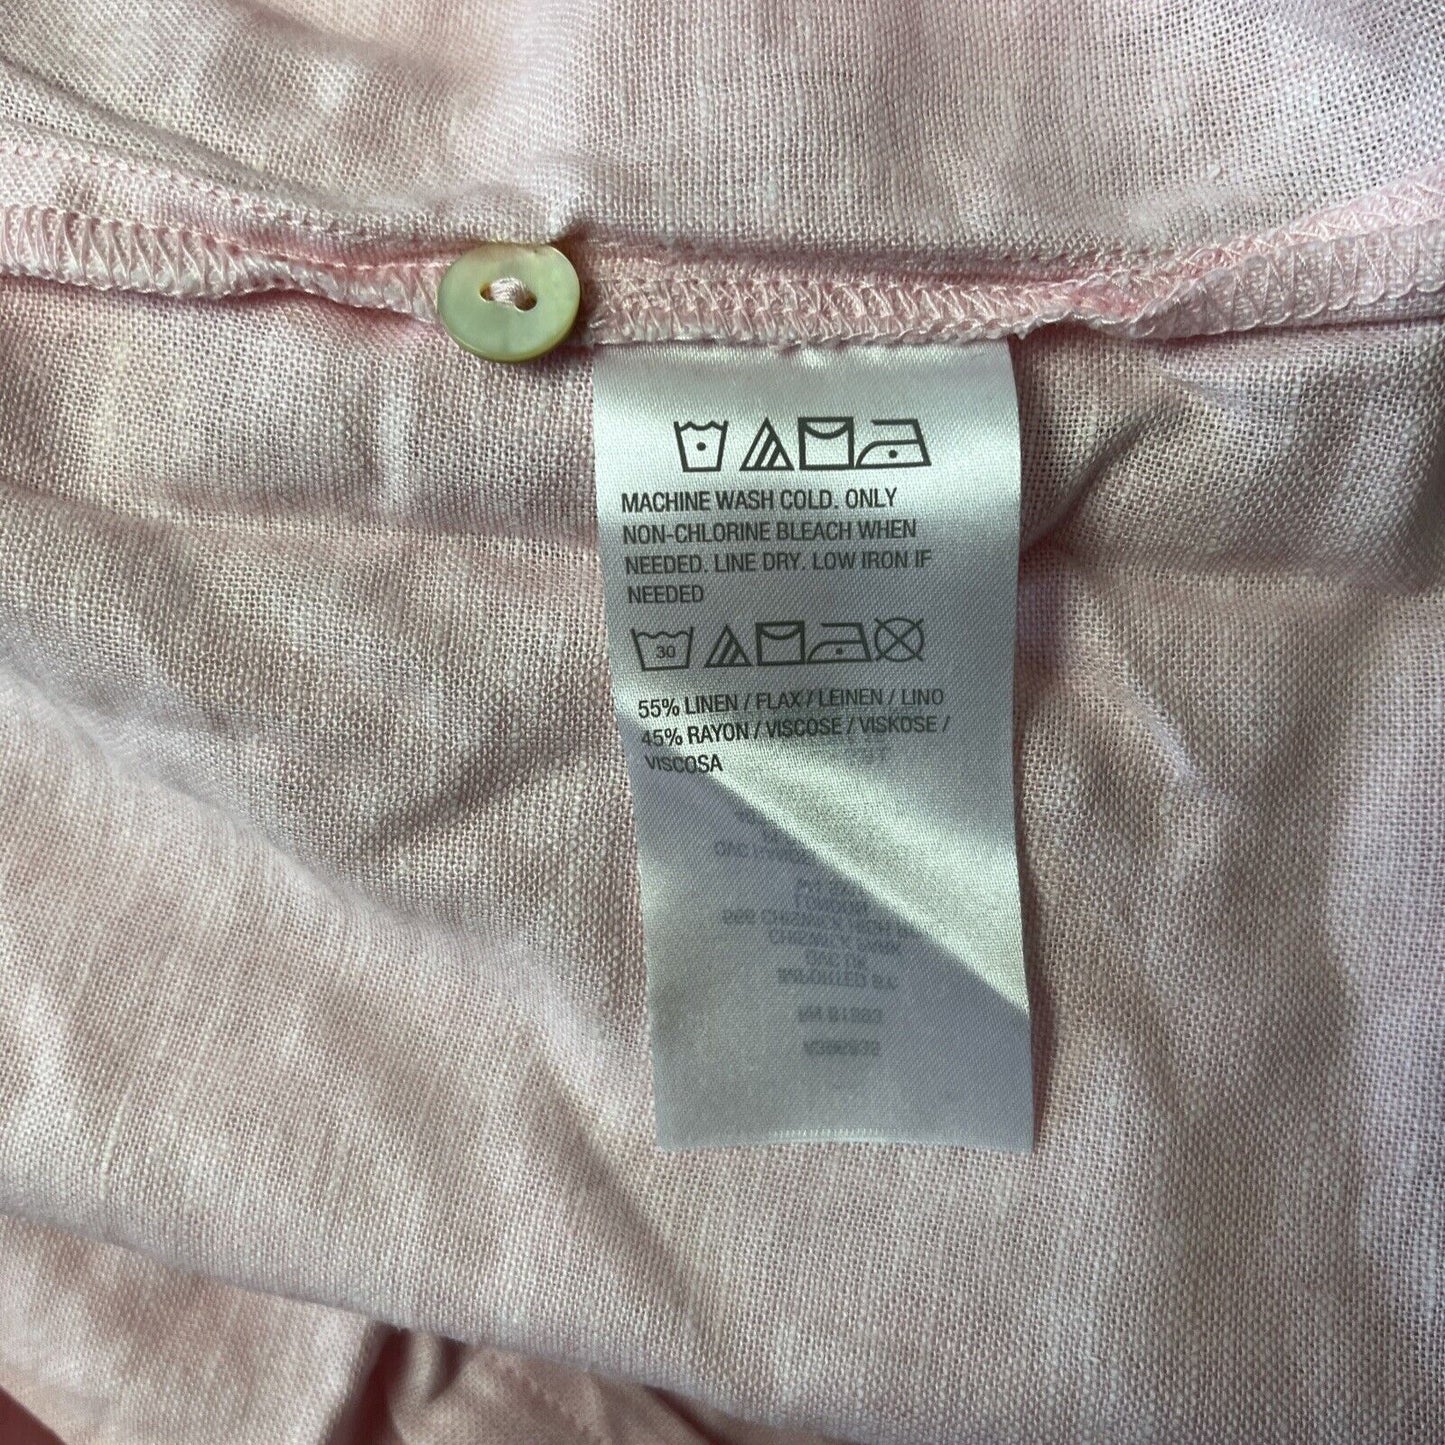 Susan Graver Regular Easy Linen Blend Cross-Dyed Tunic (Pink, Large) A396835